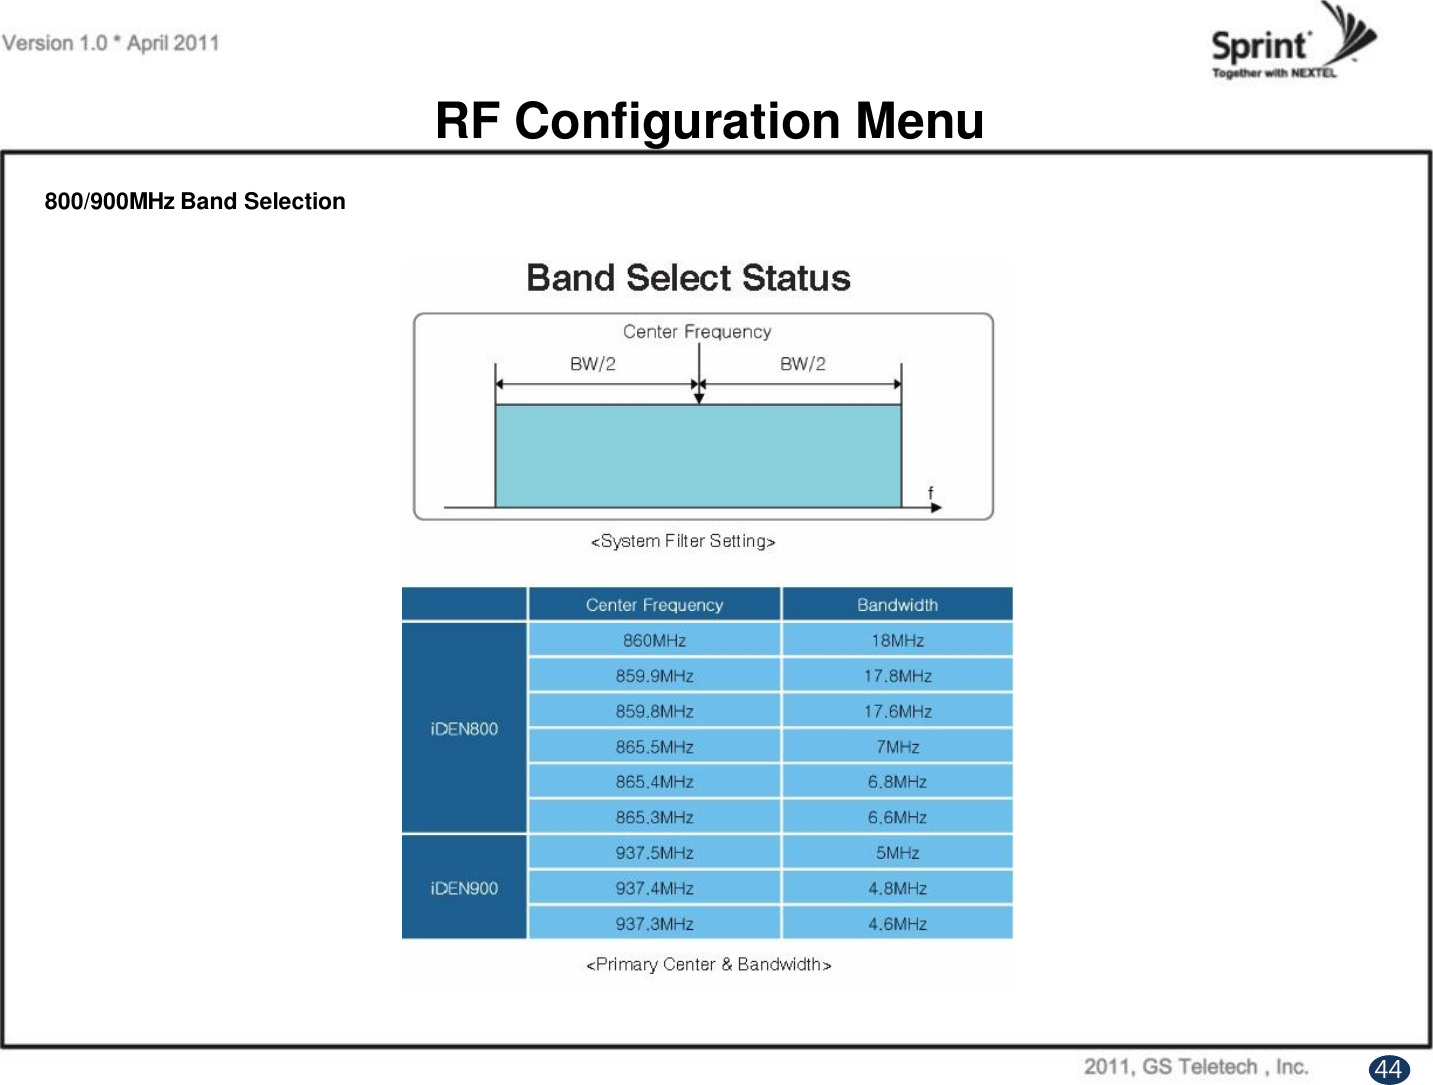 800/900MHz Band SelectionRF Configuration Menu44